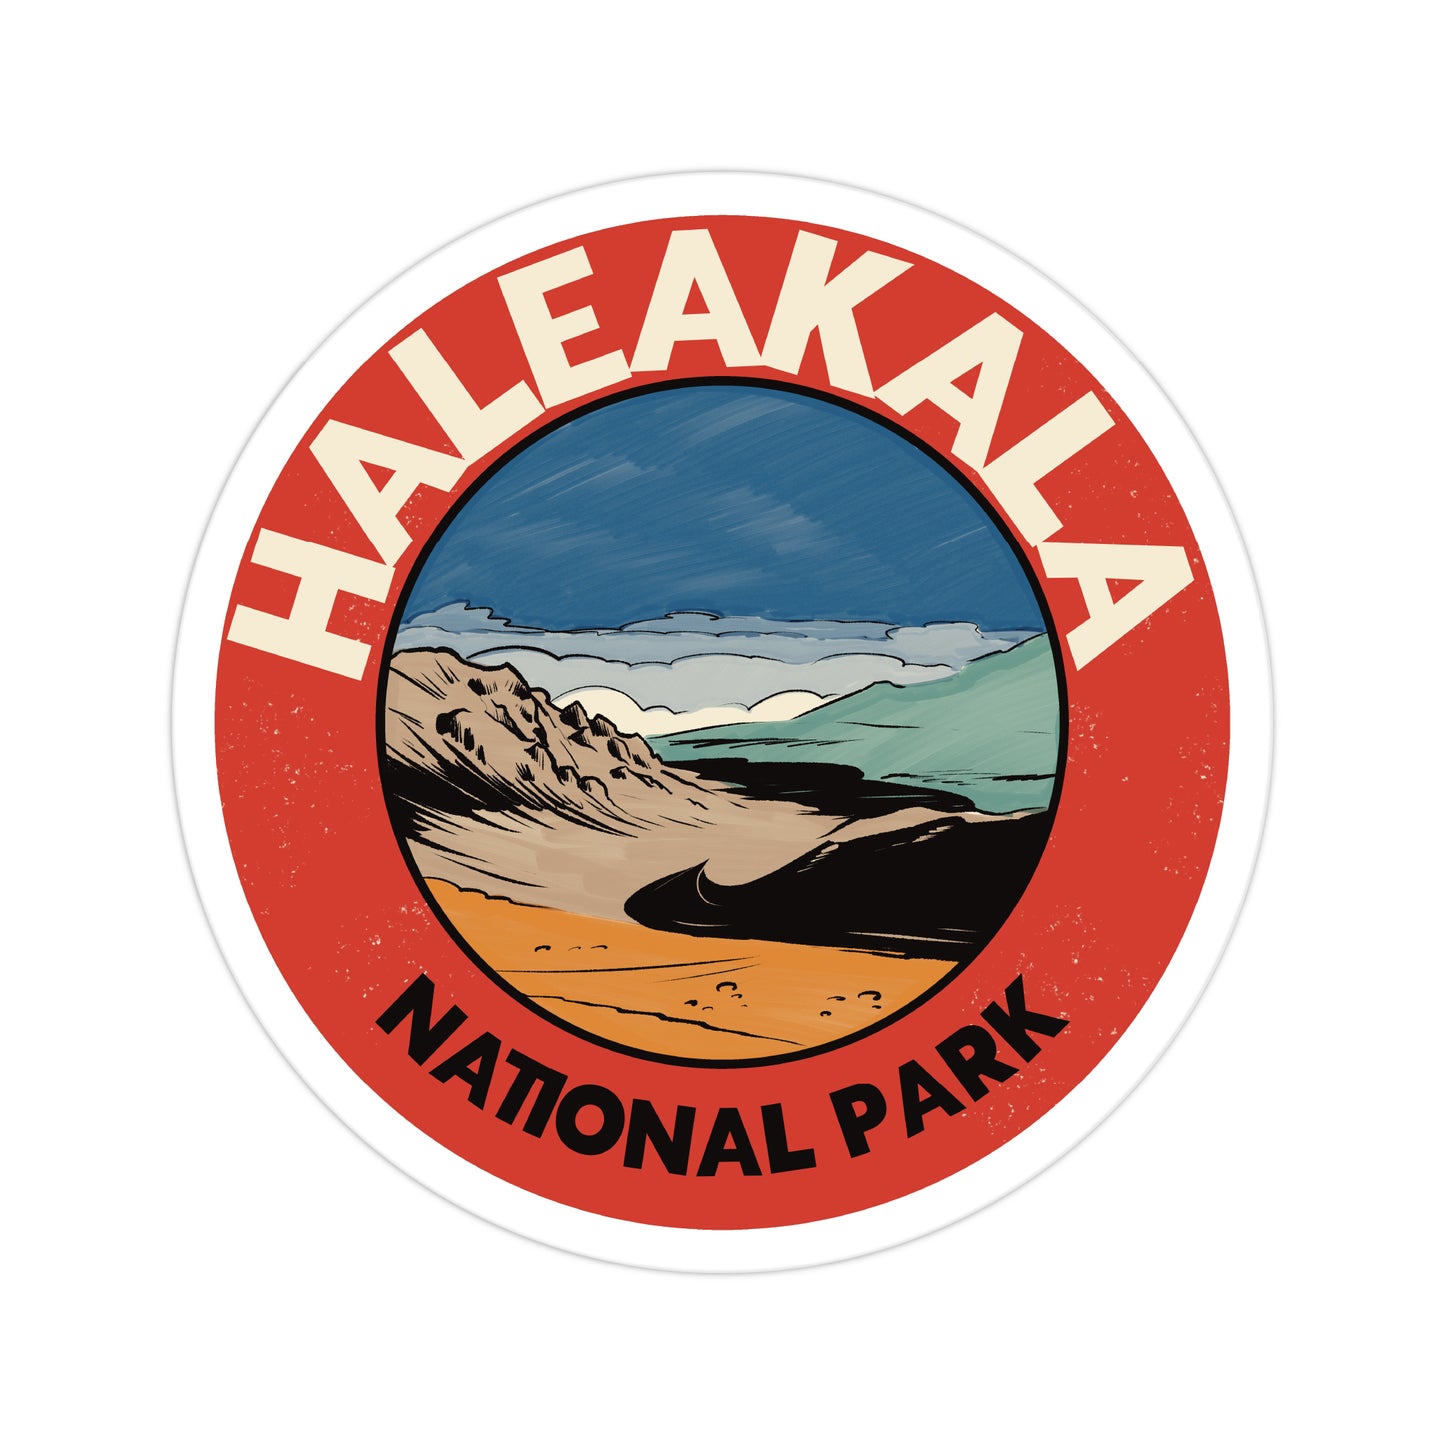 A sticker of Haleakala National Park